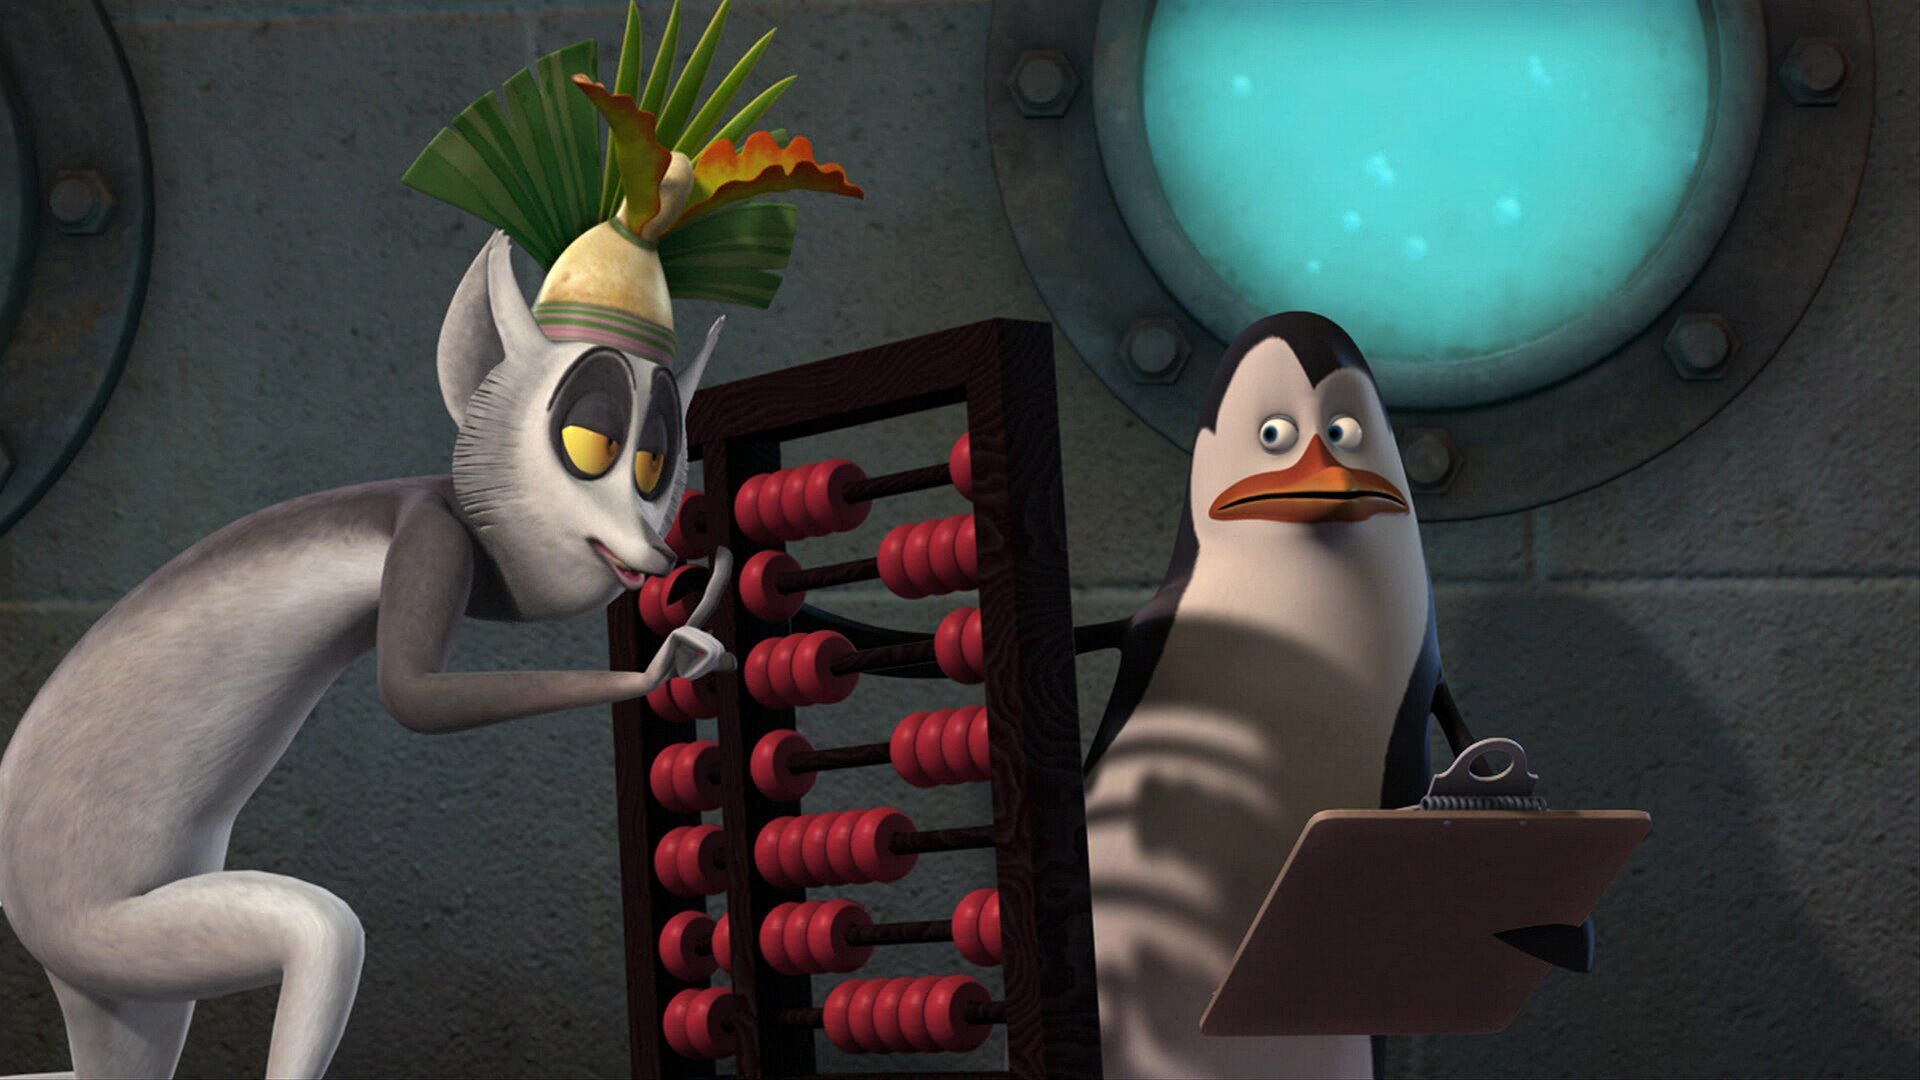 penguins of madagascar download season 2